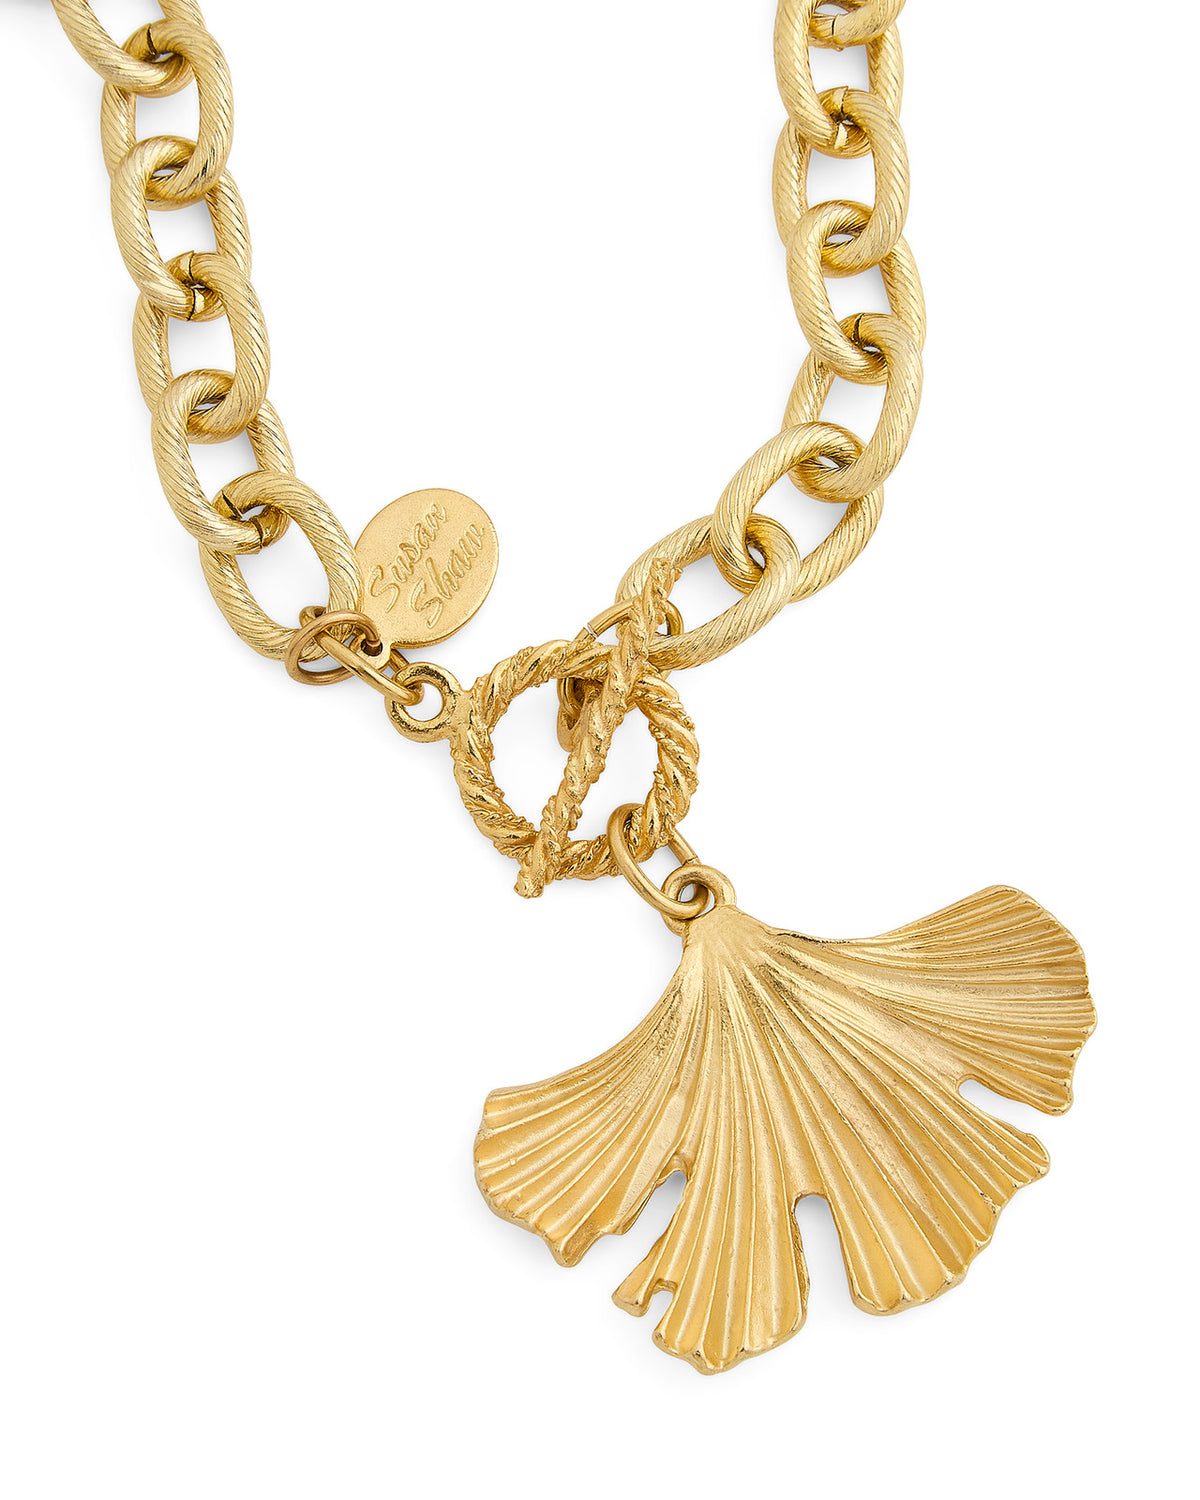 Susan Shaw 24K Gold Hand Cast Ginko Leaf Chain Necklace